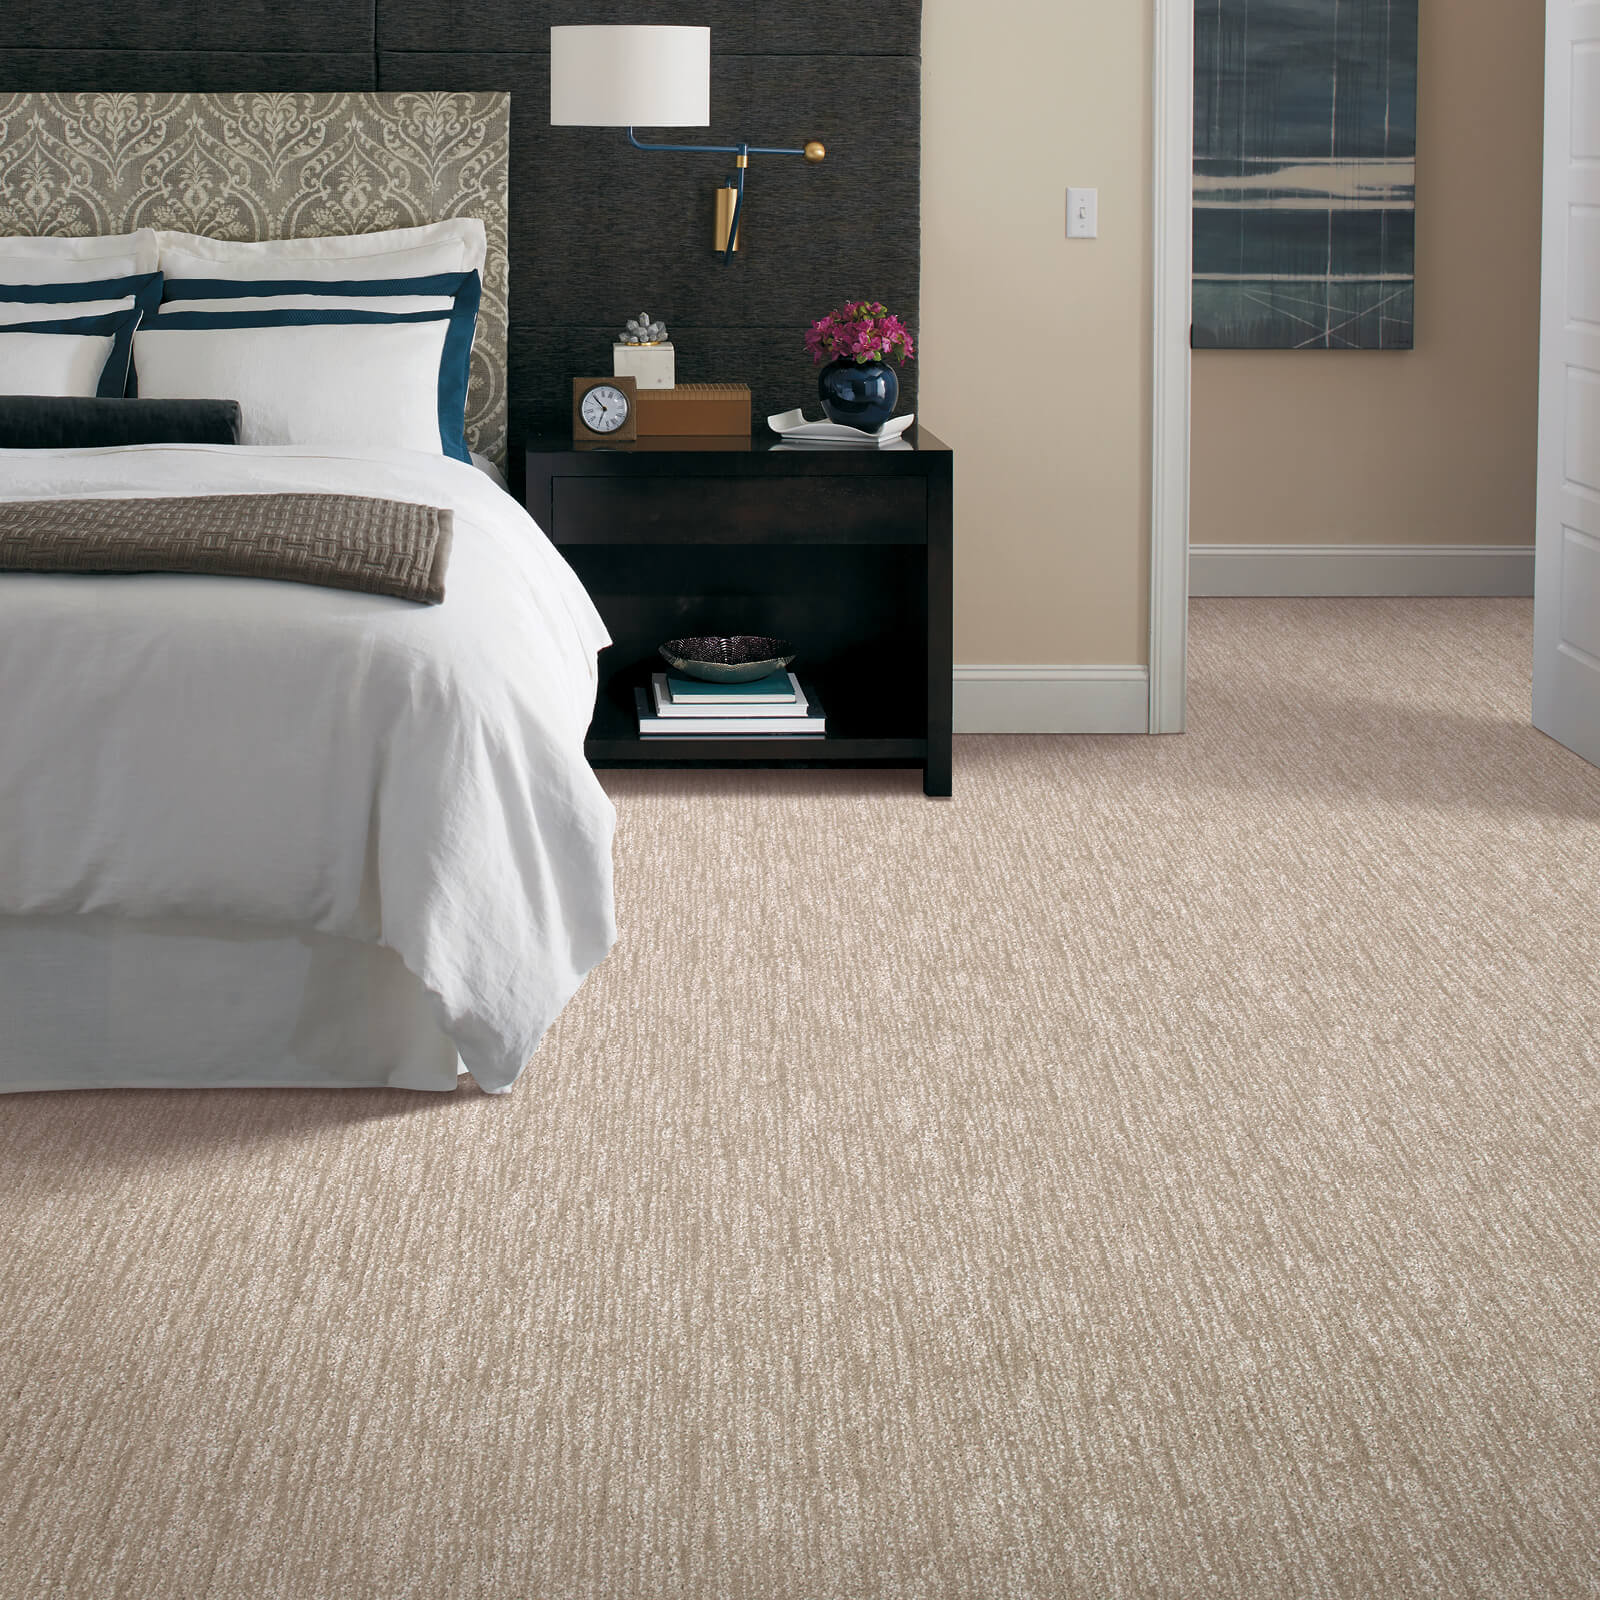 New carpet for bedroom | Floortrends